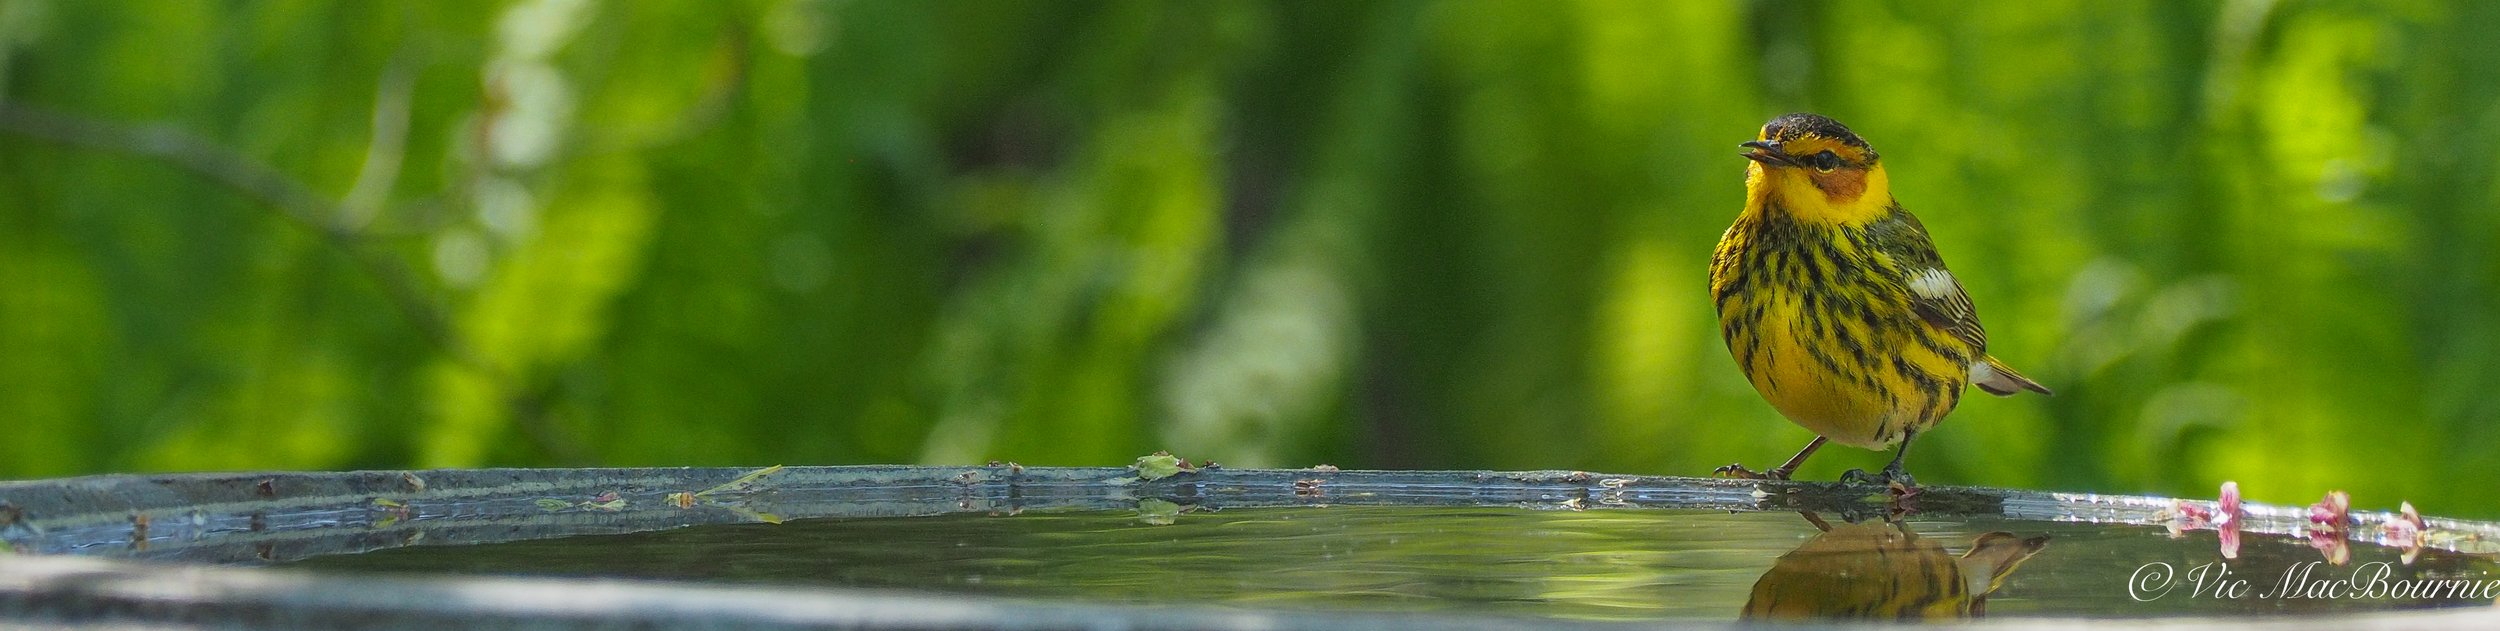 Cape May warbler on bird bath.